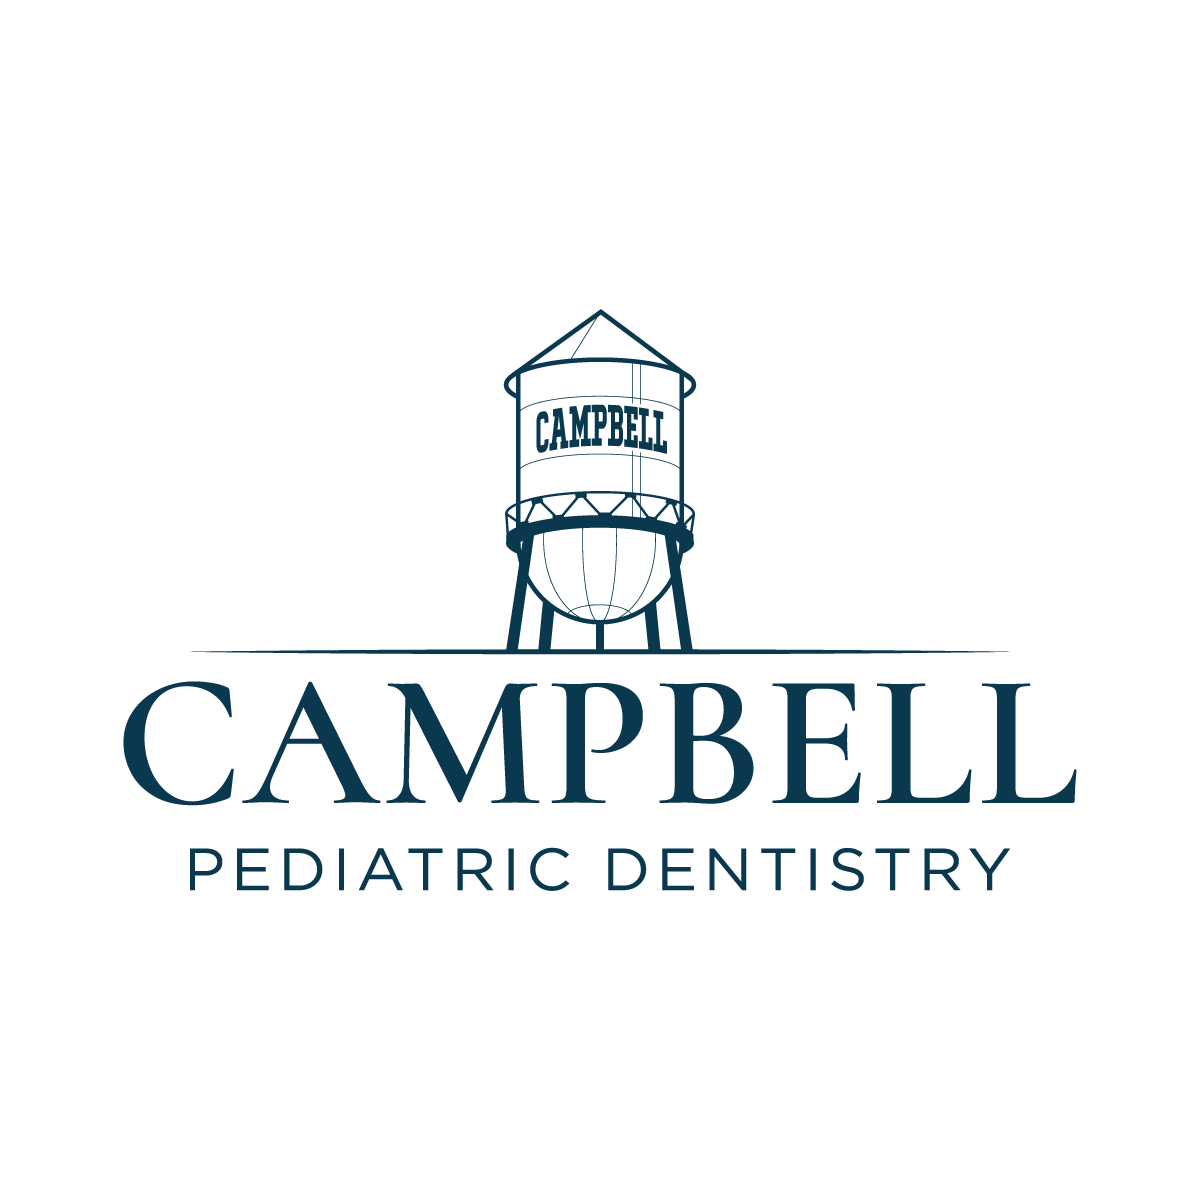 Campbell Pediatric Dentistry